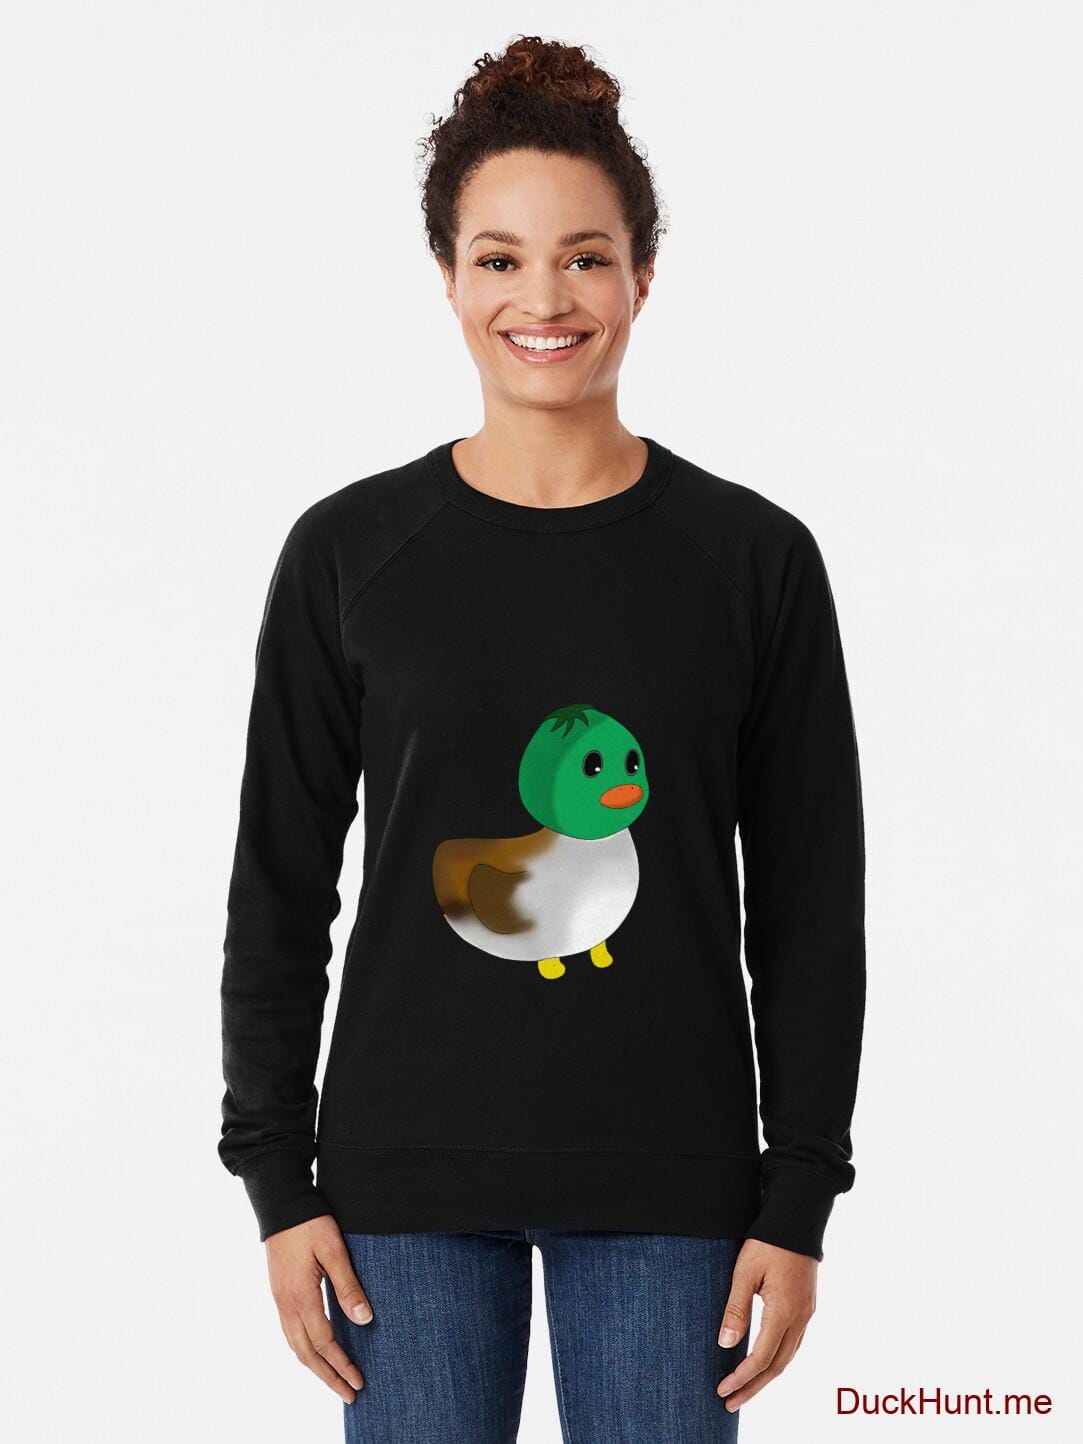 Normal Duck Black Lightweight Sweatshirt alternative image 1